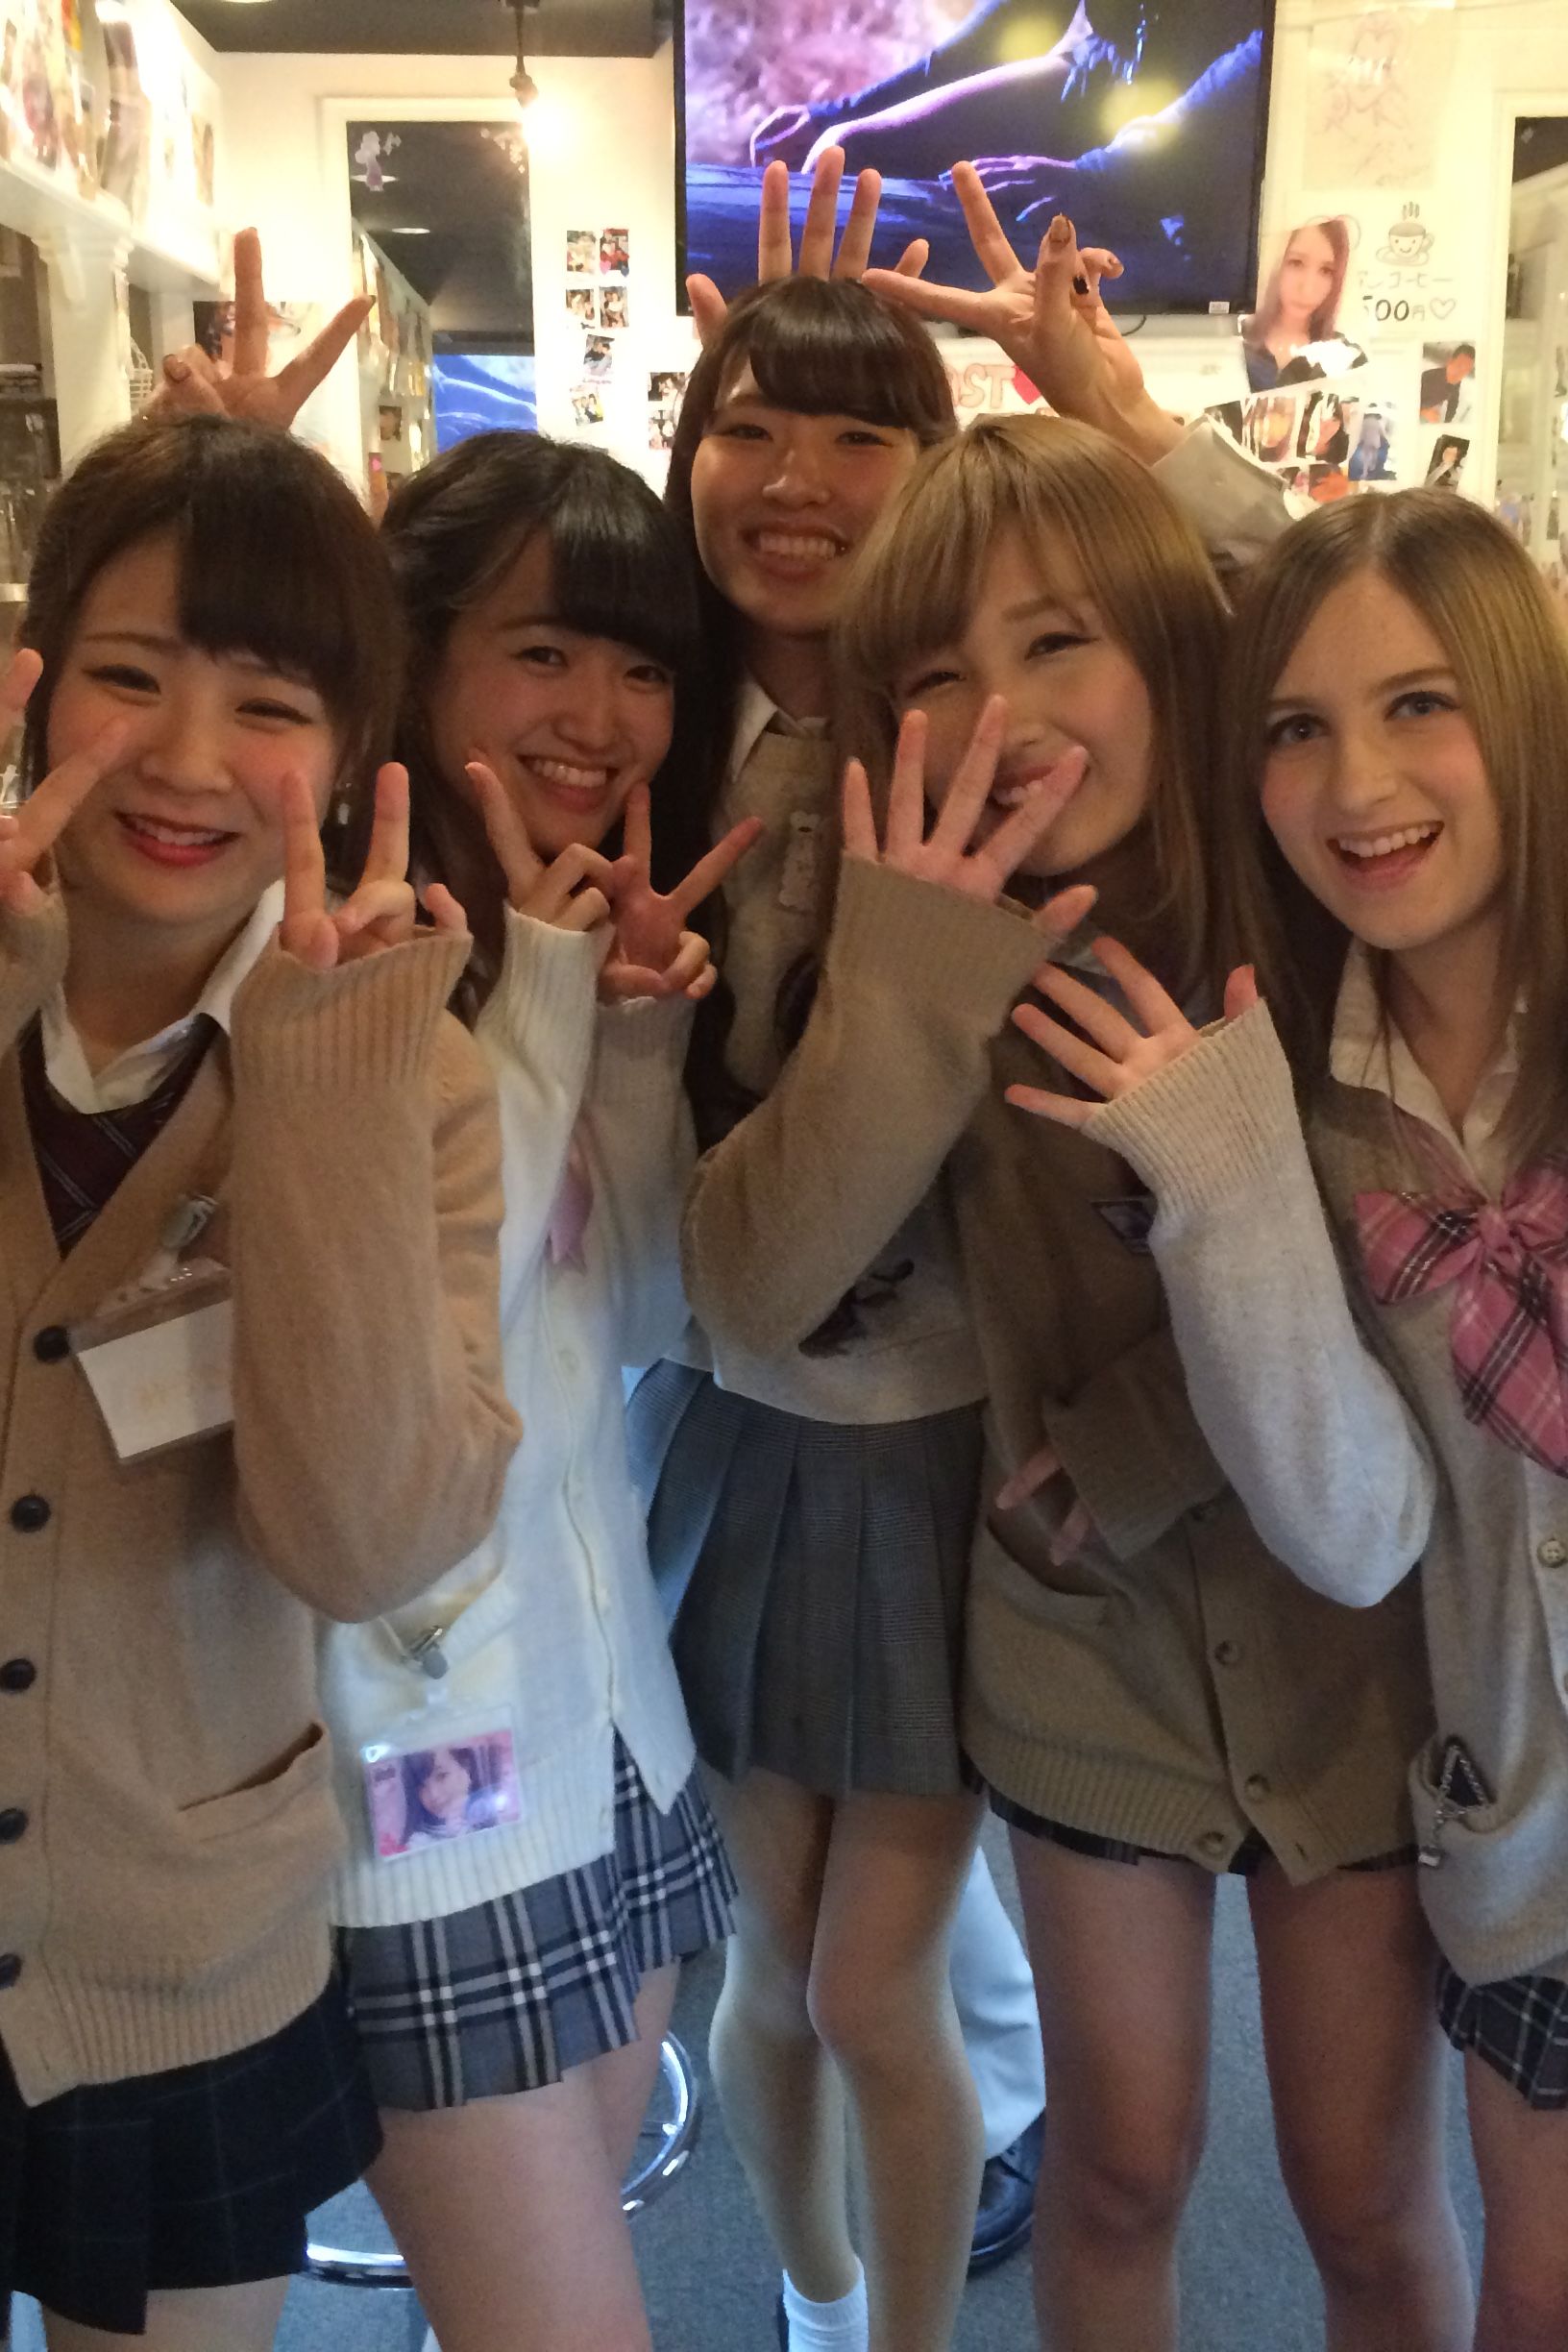 Facial Schoolgirl Uniform Porn - Japan school girl culture: The dark truth | CNN